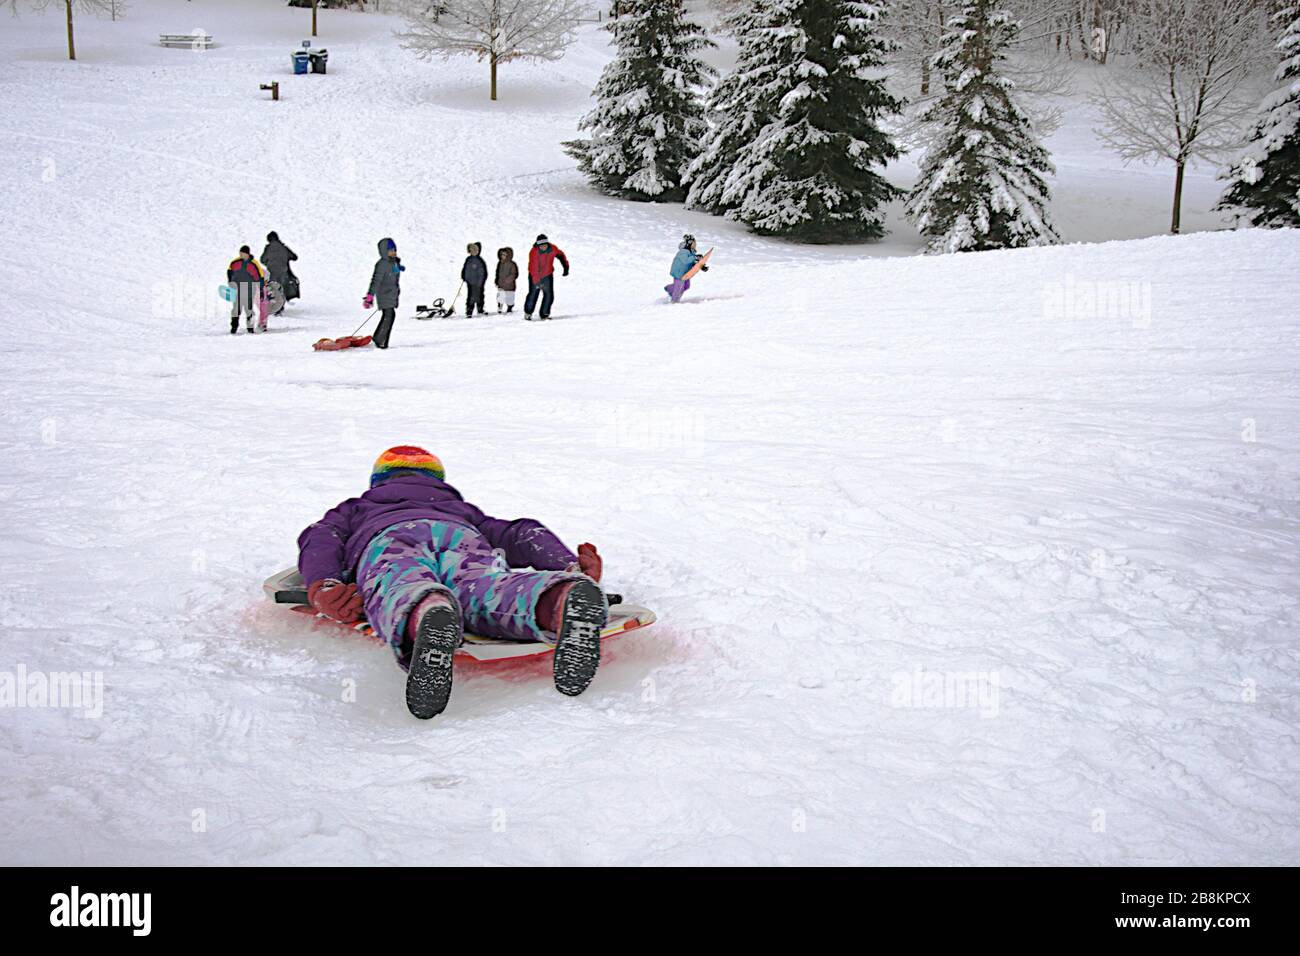 Wintersport-Rodeln - Kinder-Rodeln auf dem Berghang im Winter Stockfoto